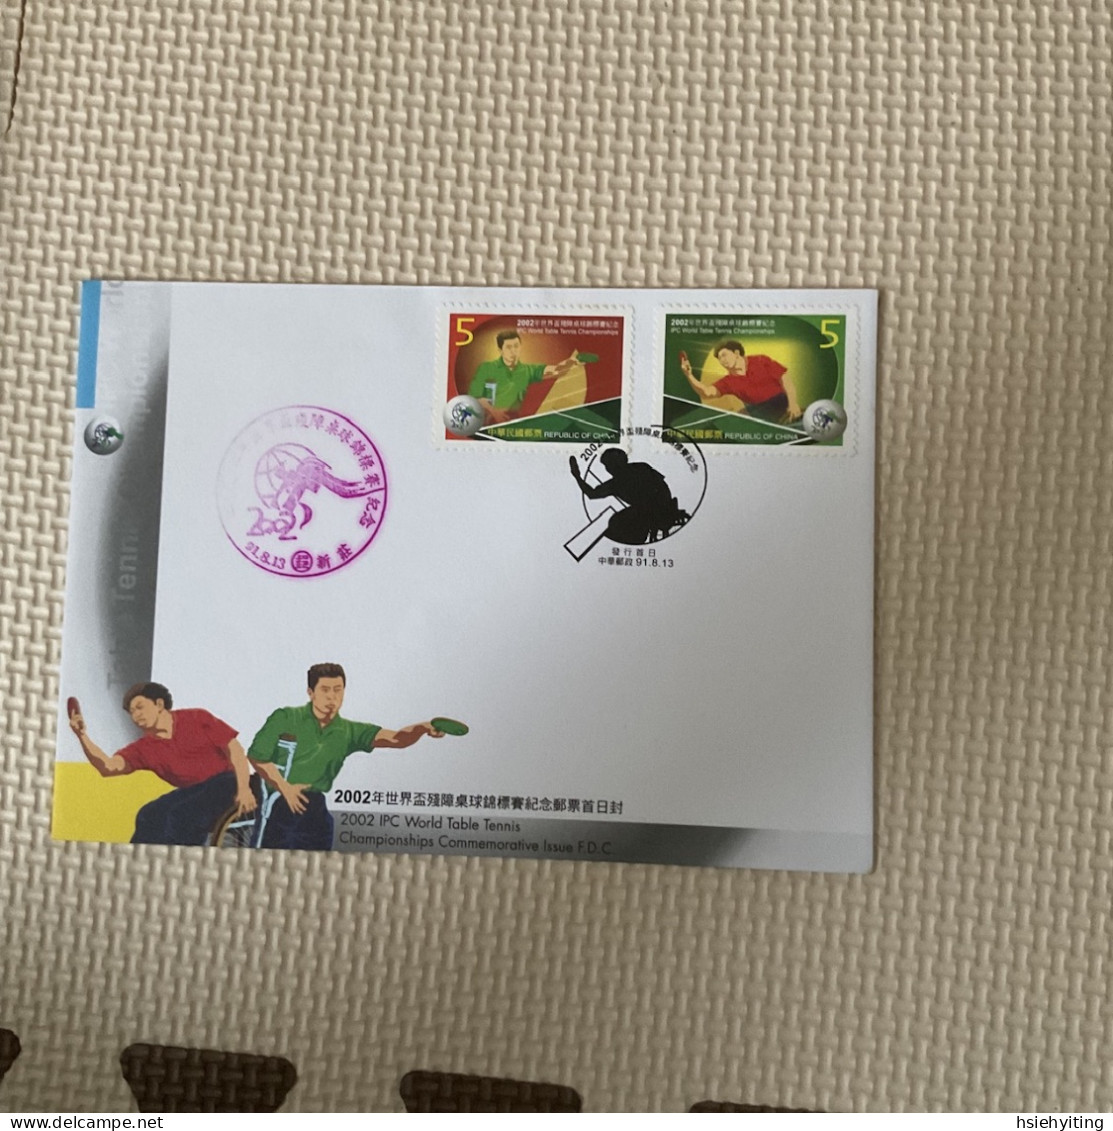 Taiwan Postage Stamps - Tennis Tavolo